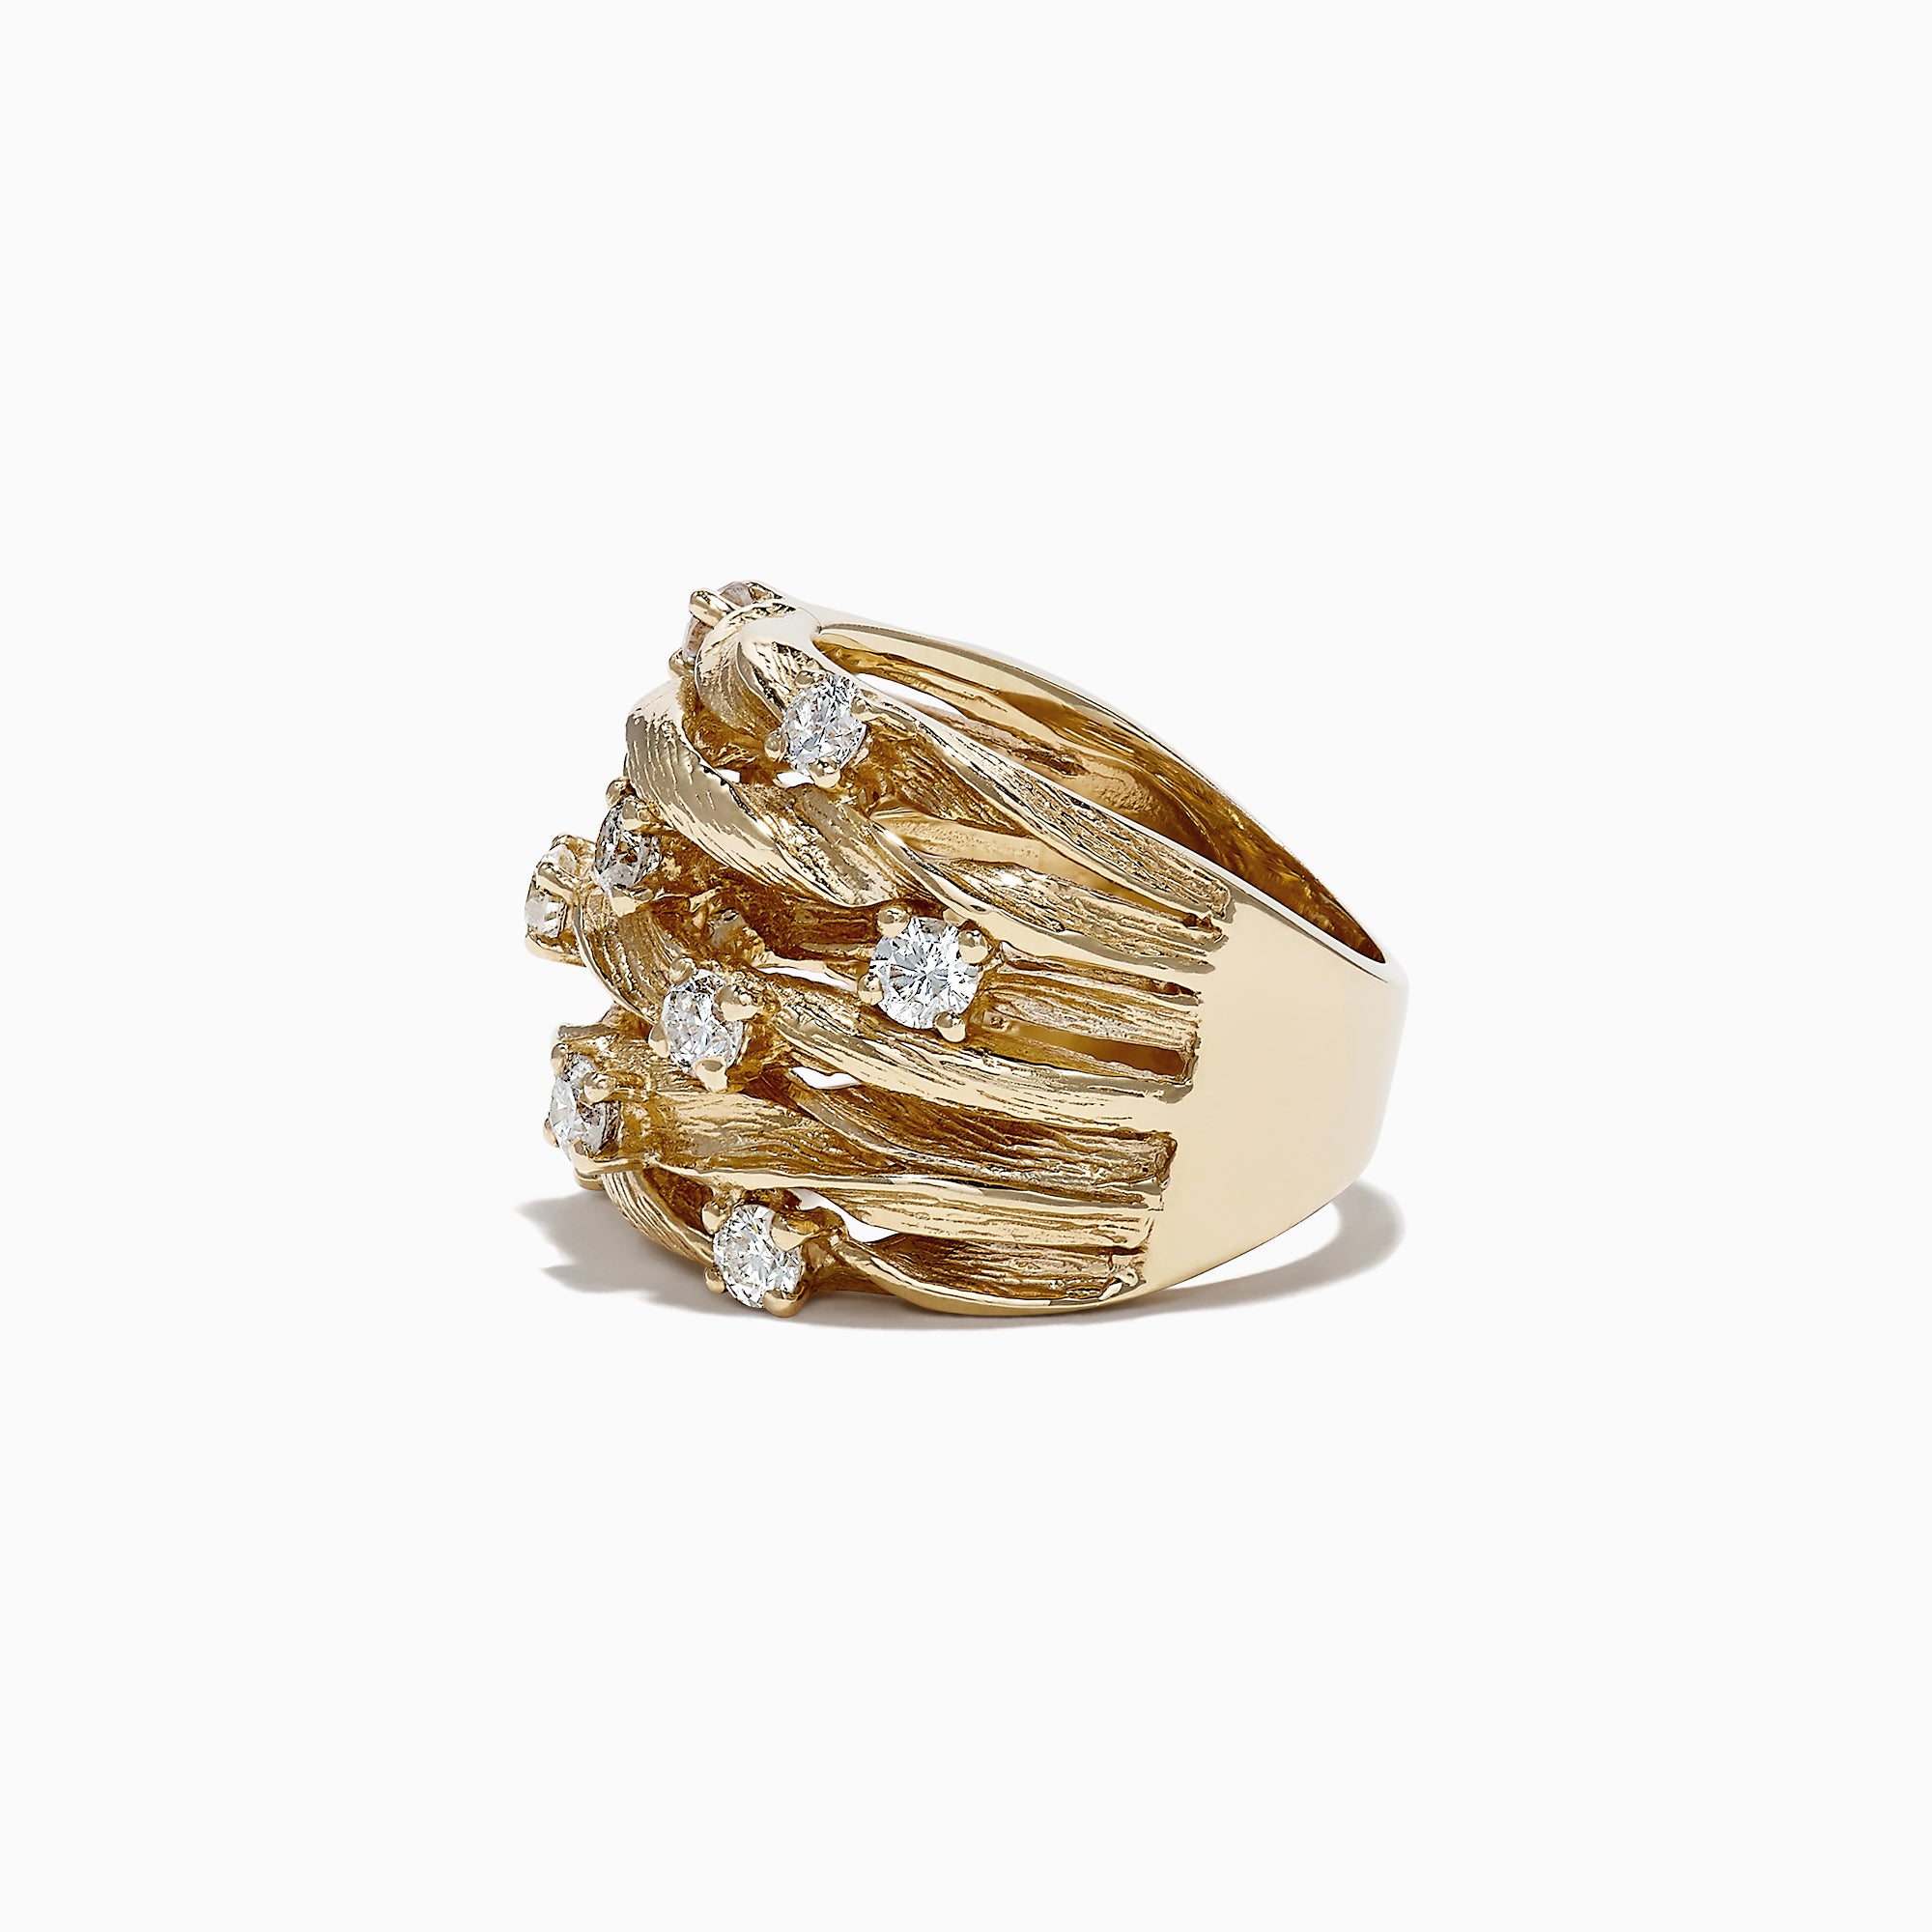 Effy D'Oro 14K Yellow Gold Diamond Ring, 0.98 TCW